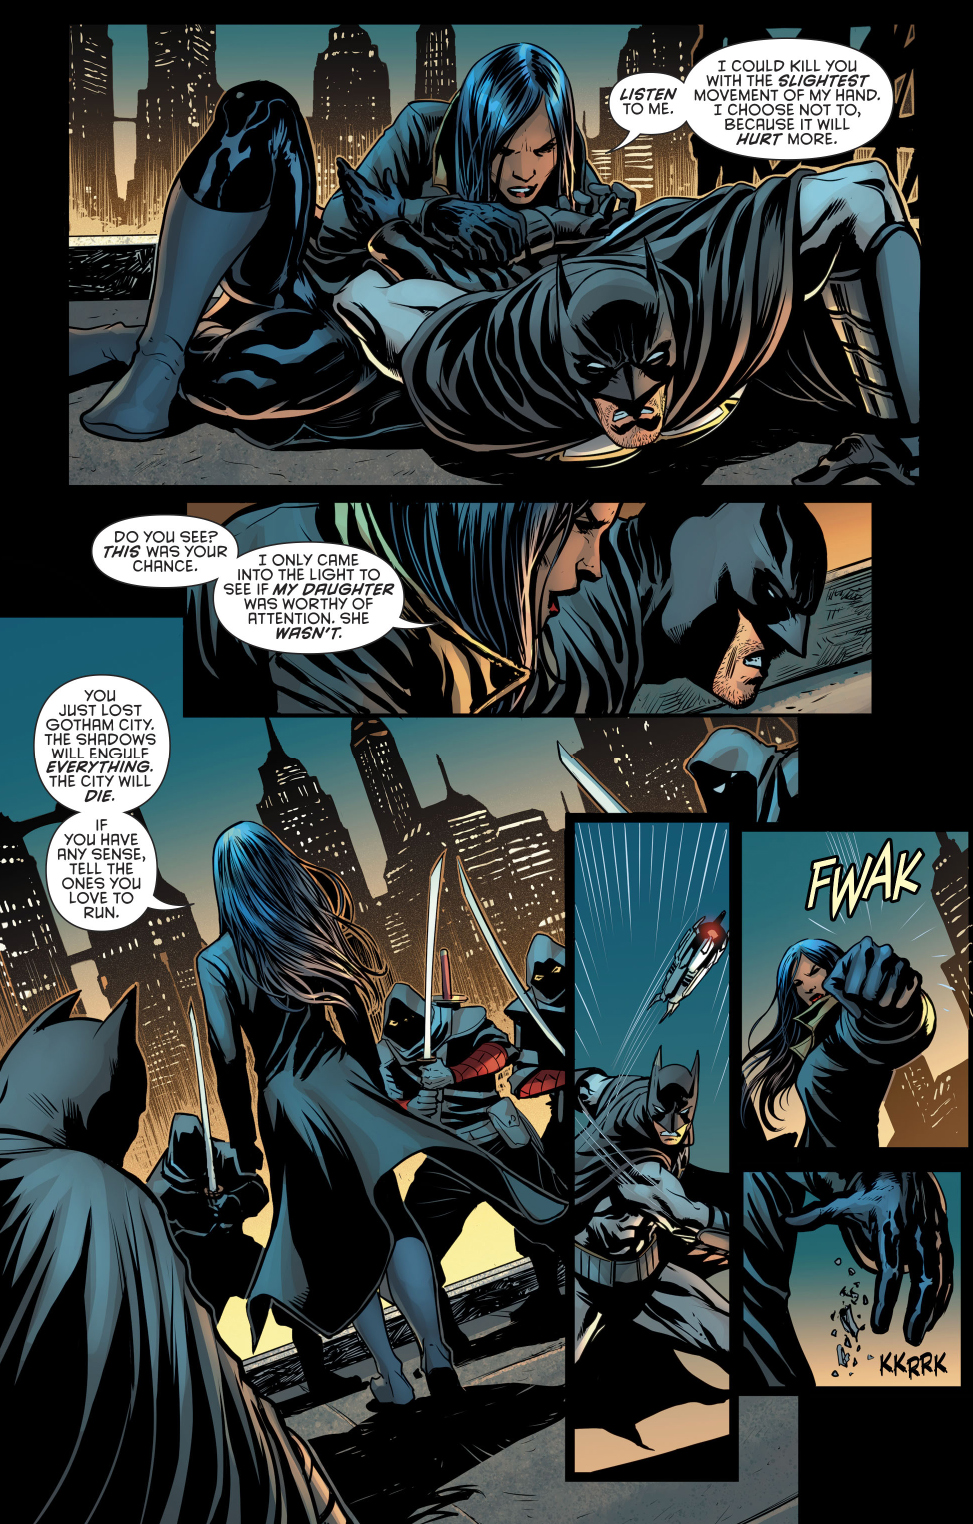 Batman vs Lady Shiva - Who would win in a fight? - Superhero Database